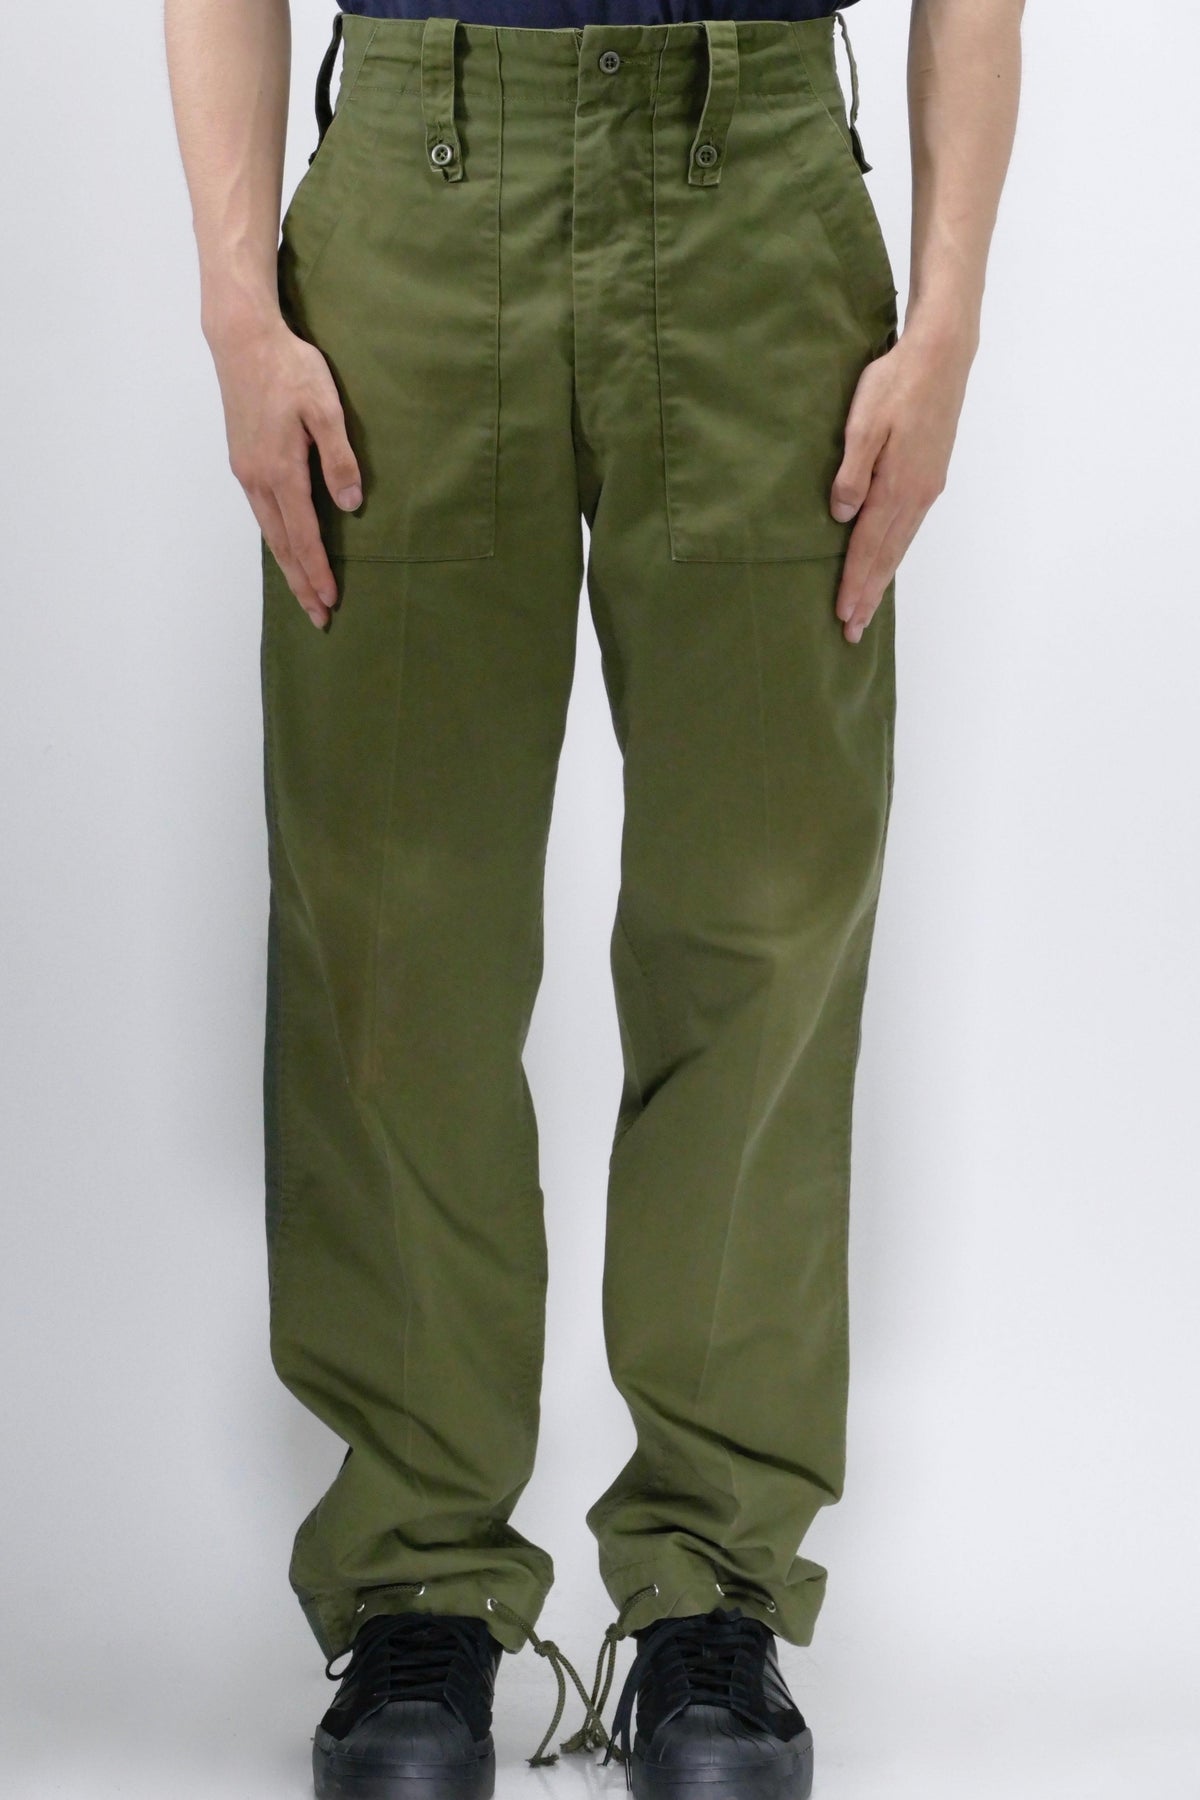 Myar British Fatigue Military Pants - Green - Due West